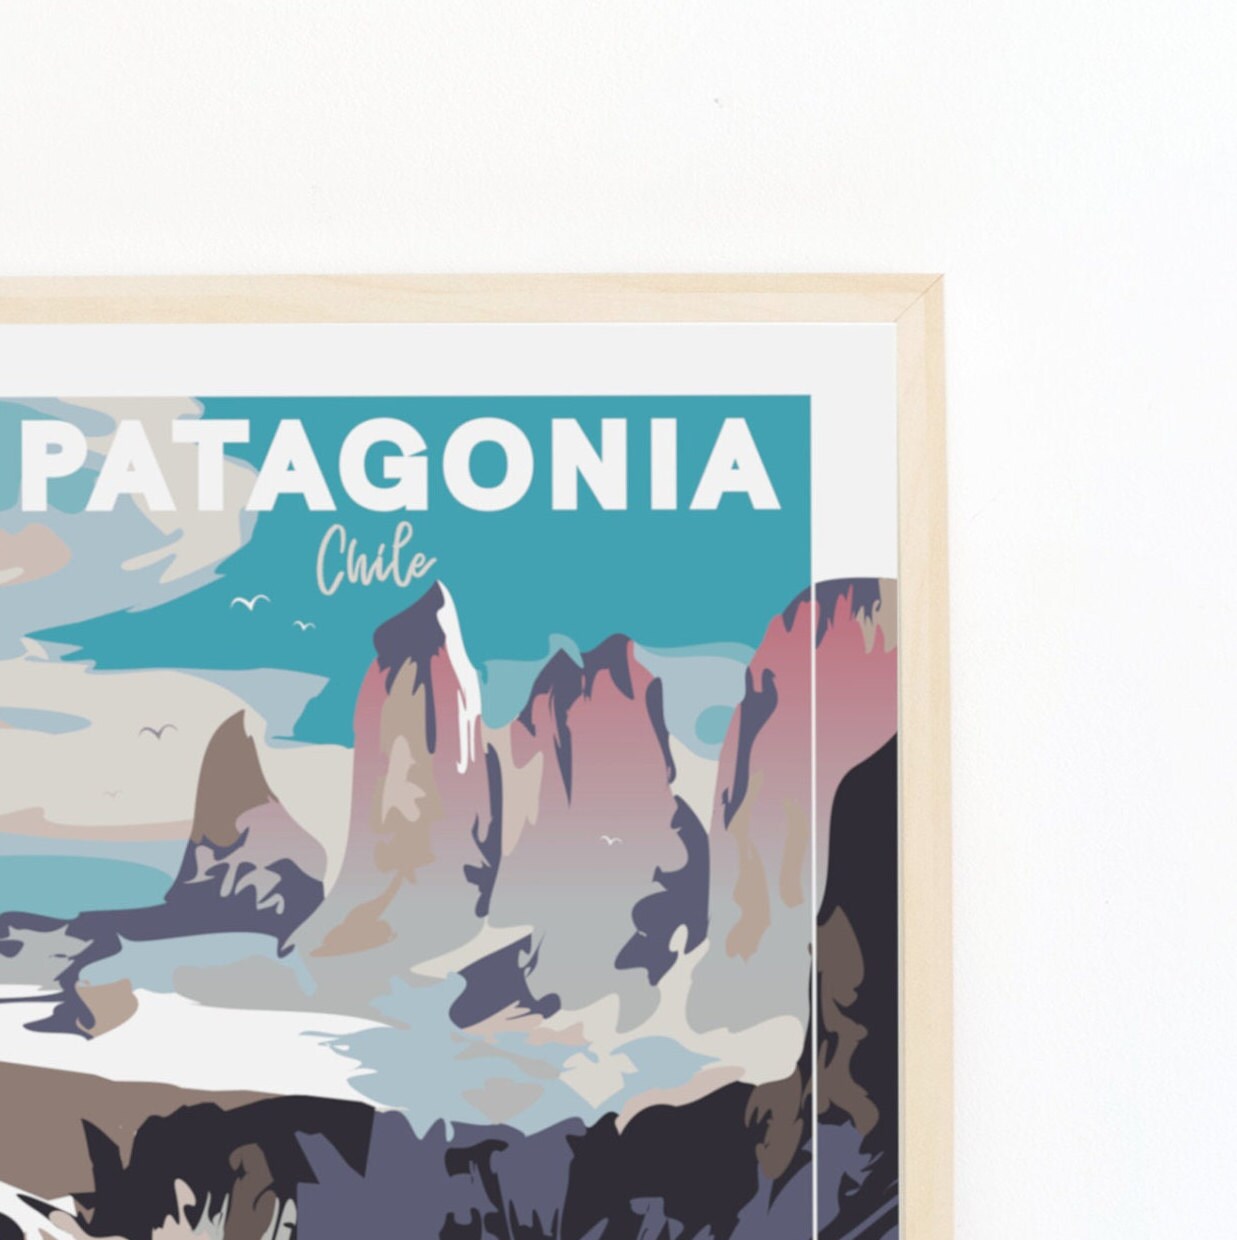 PATAGONIA Torres Del Paine CHILE Vintage Travel Poster Diy - Etsy